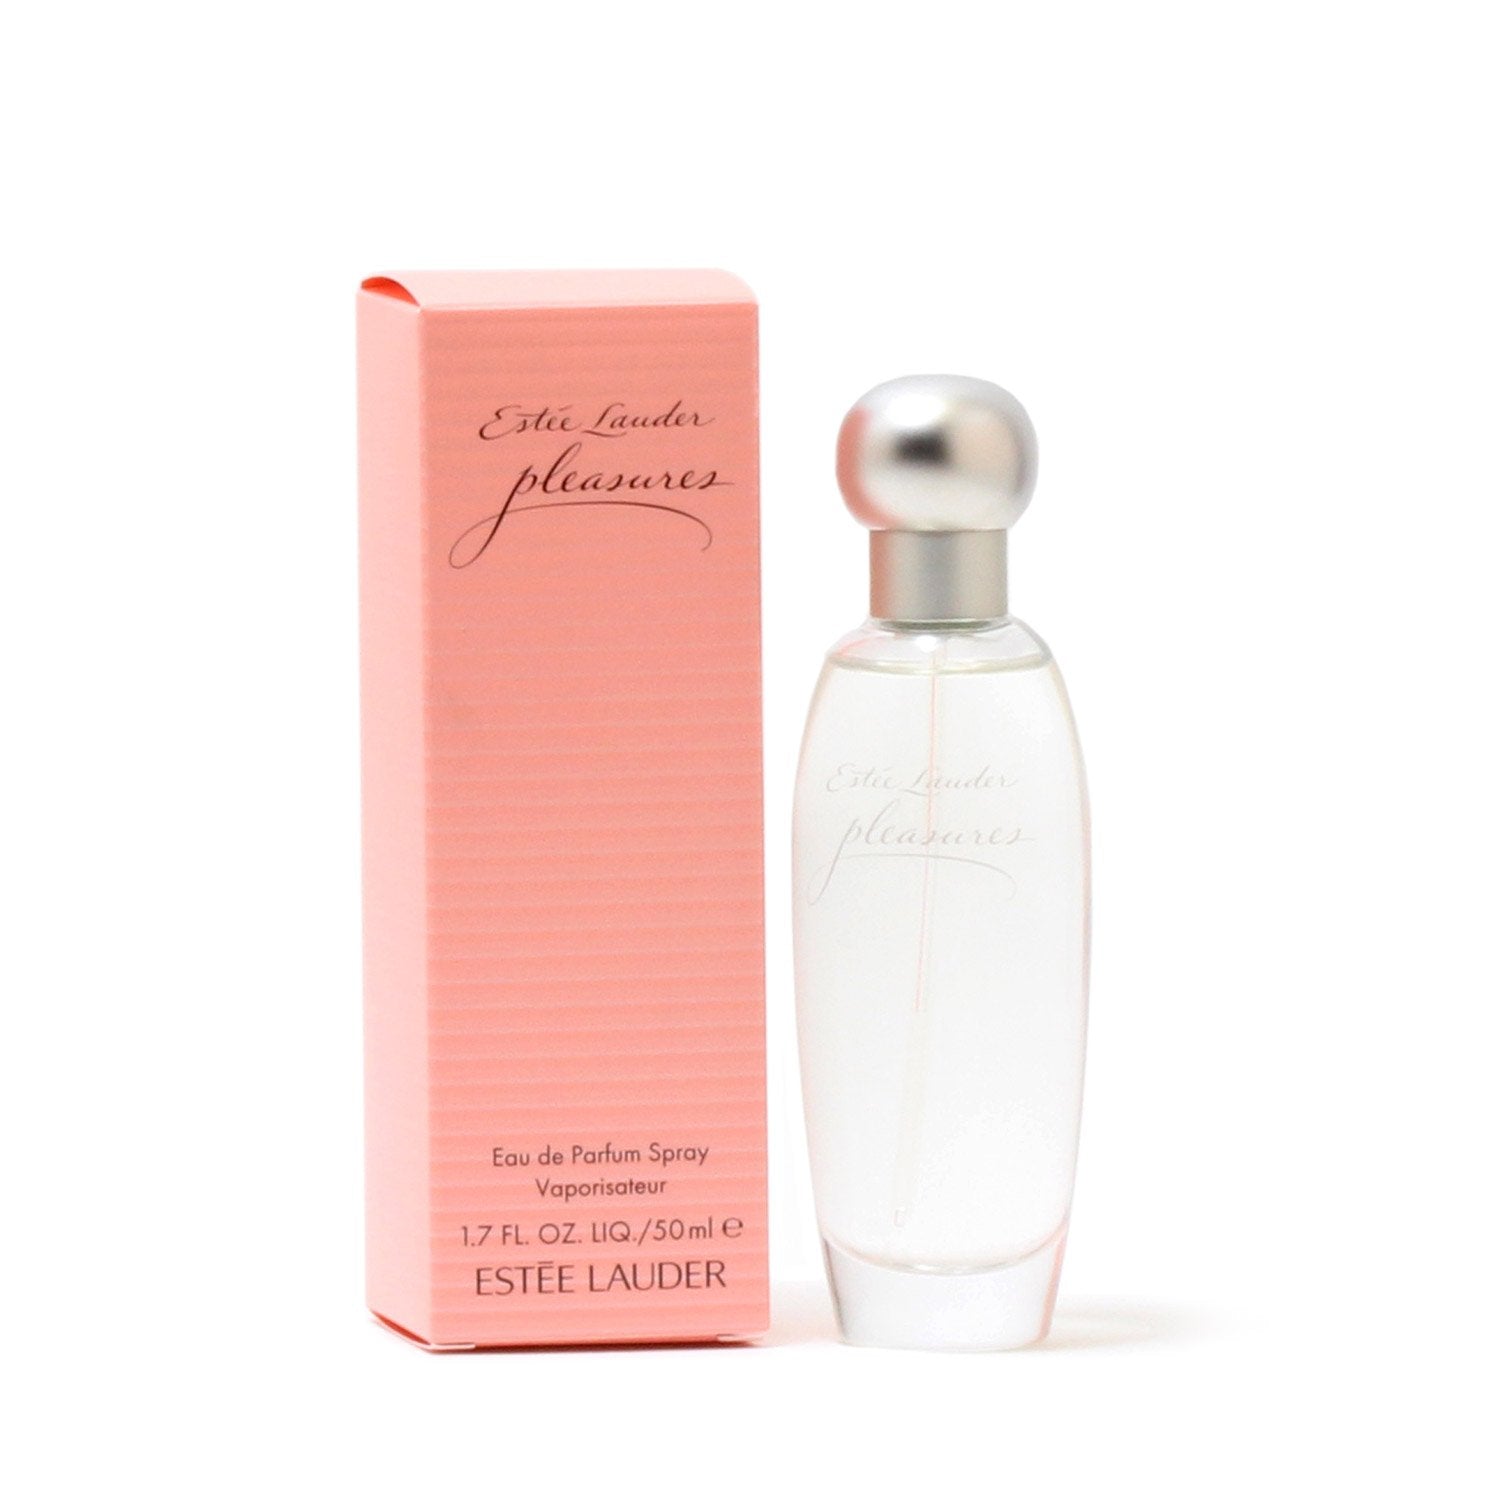 Perfume - PLEASURES FOR WOMEN BY ESTEE LAUDER - EAU DE PARFUM SPRAY